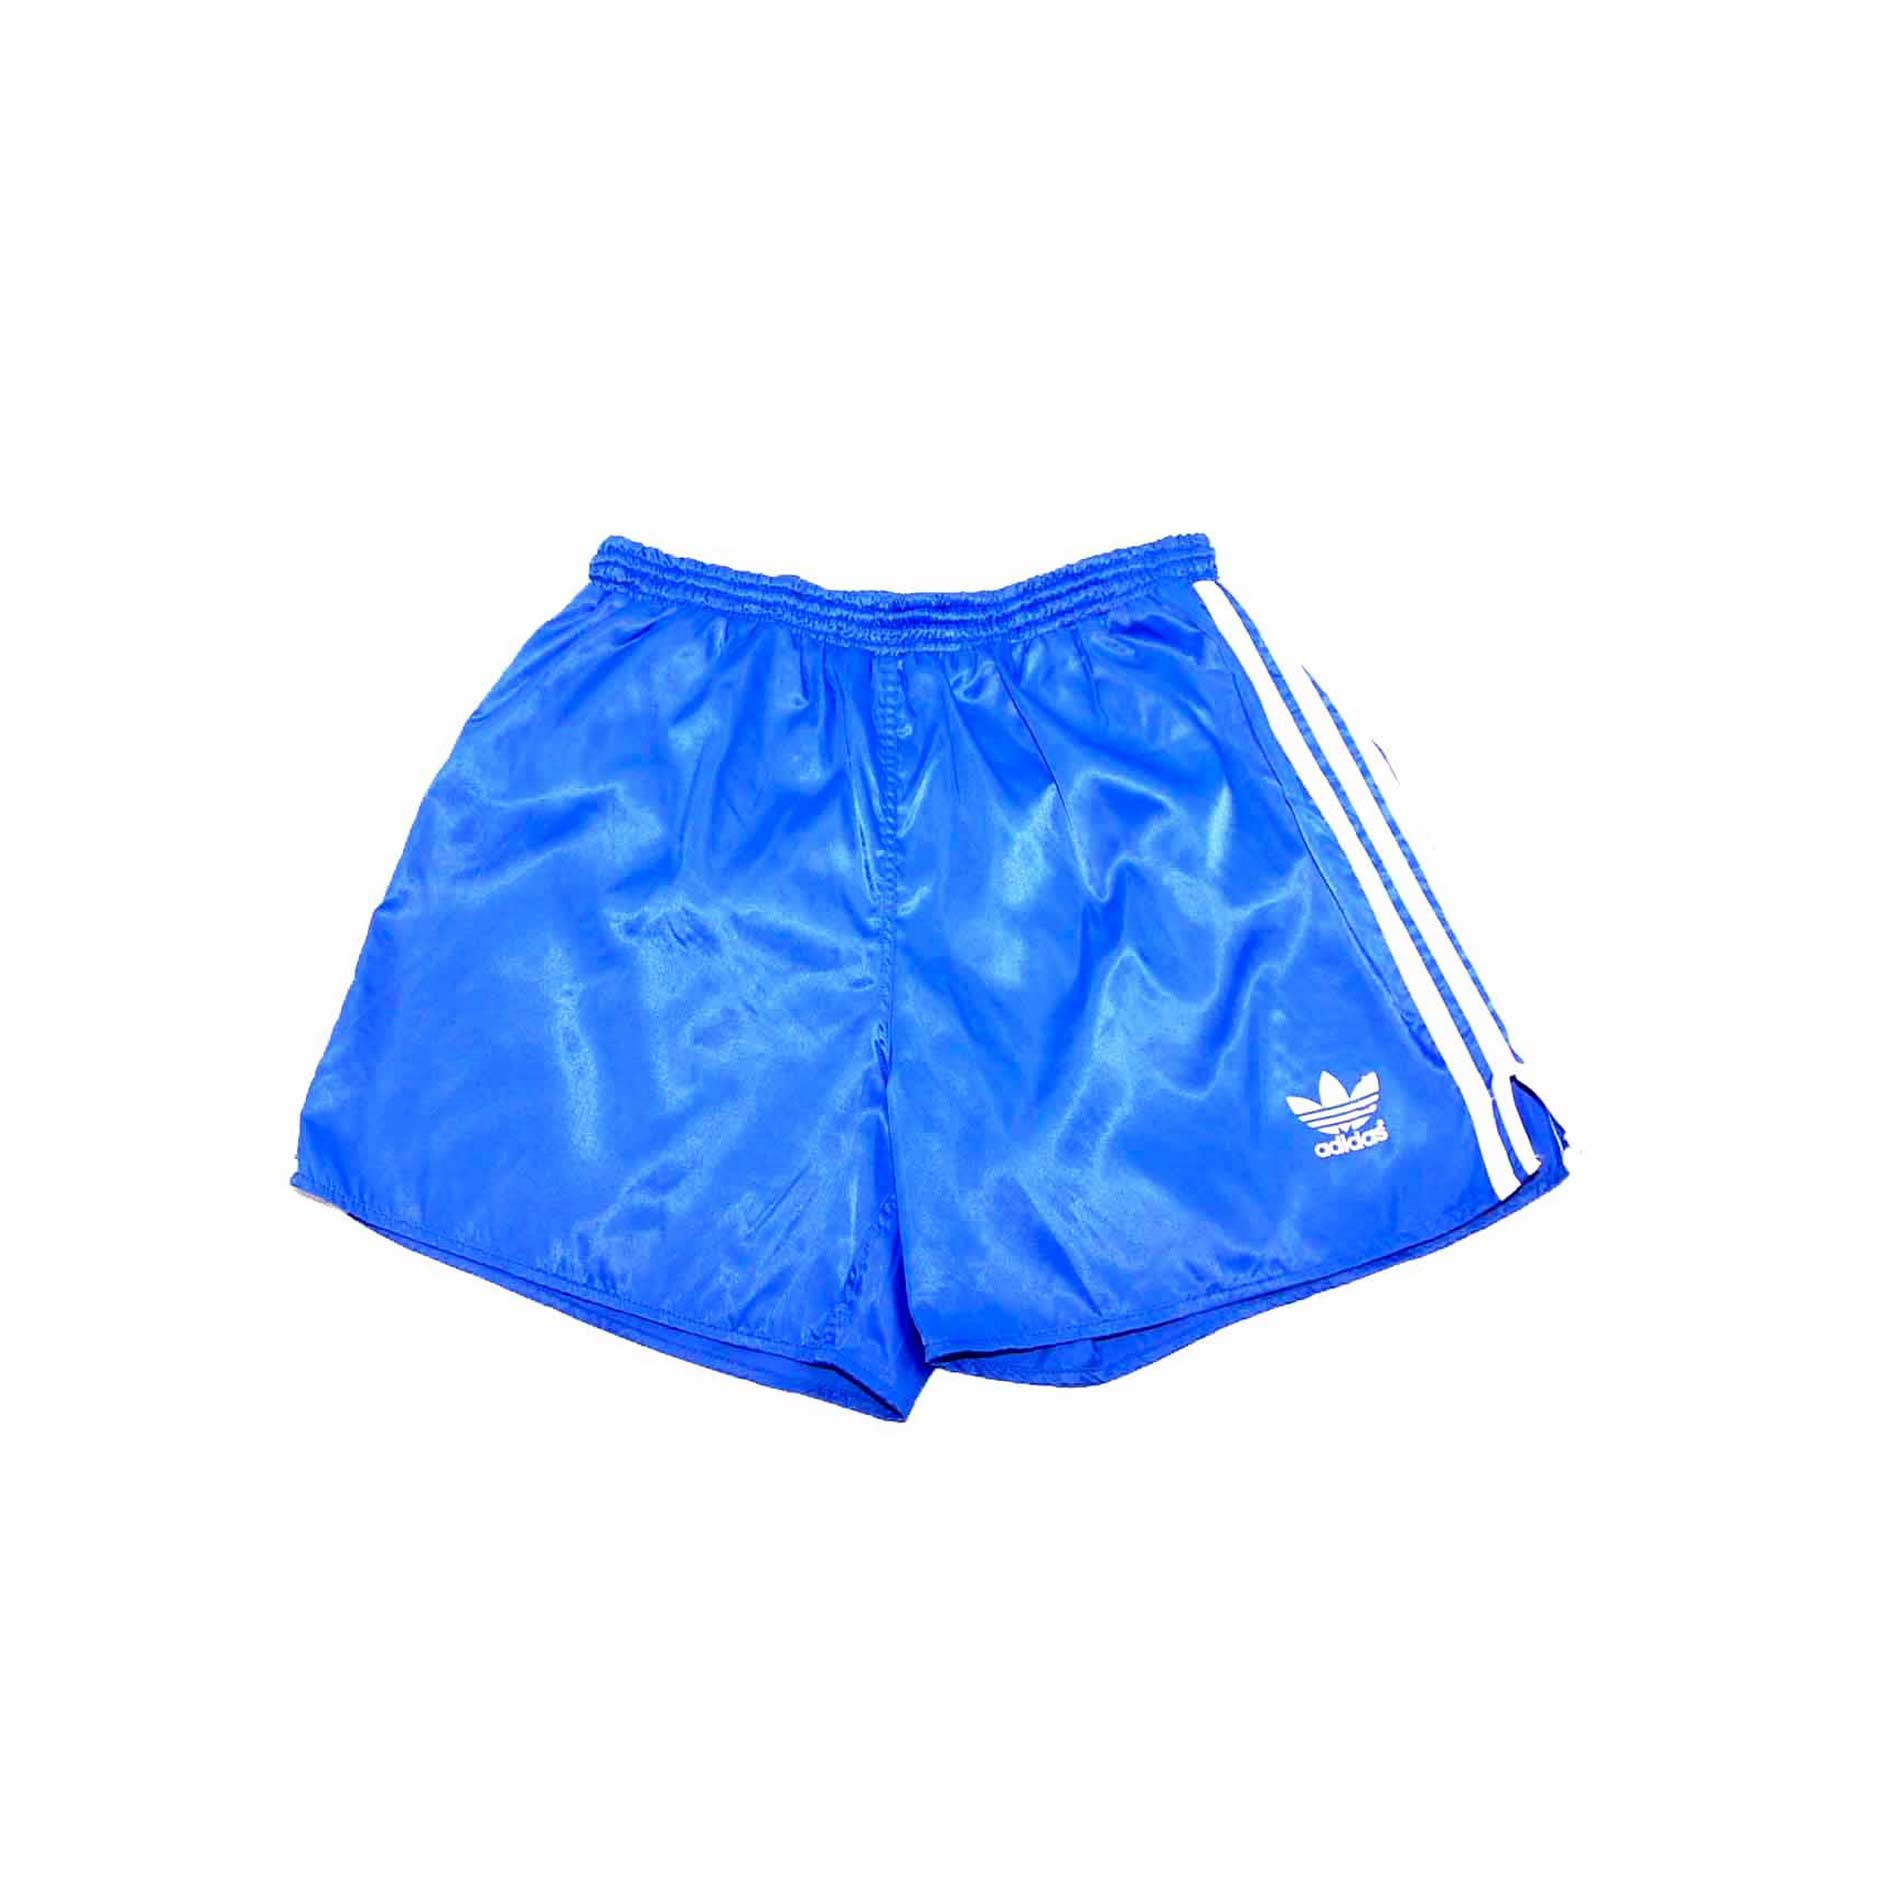 Adidas Royal Blue Shell Sport Shorts - Blue 17 Vintage Clothing